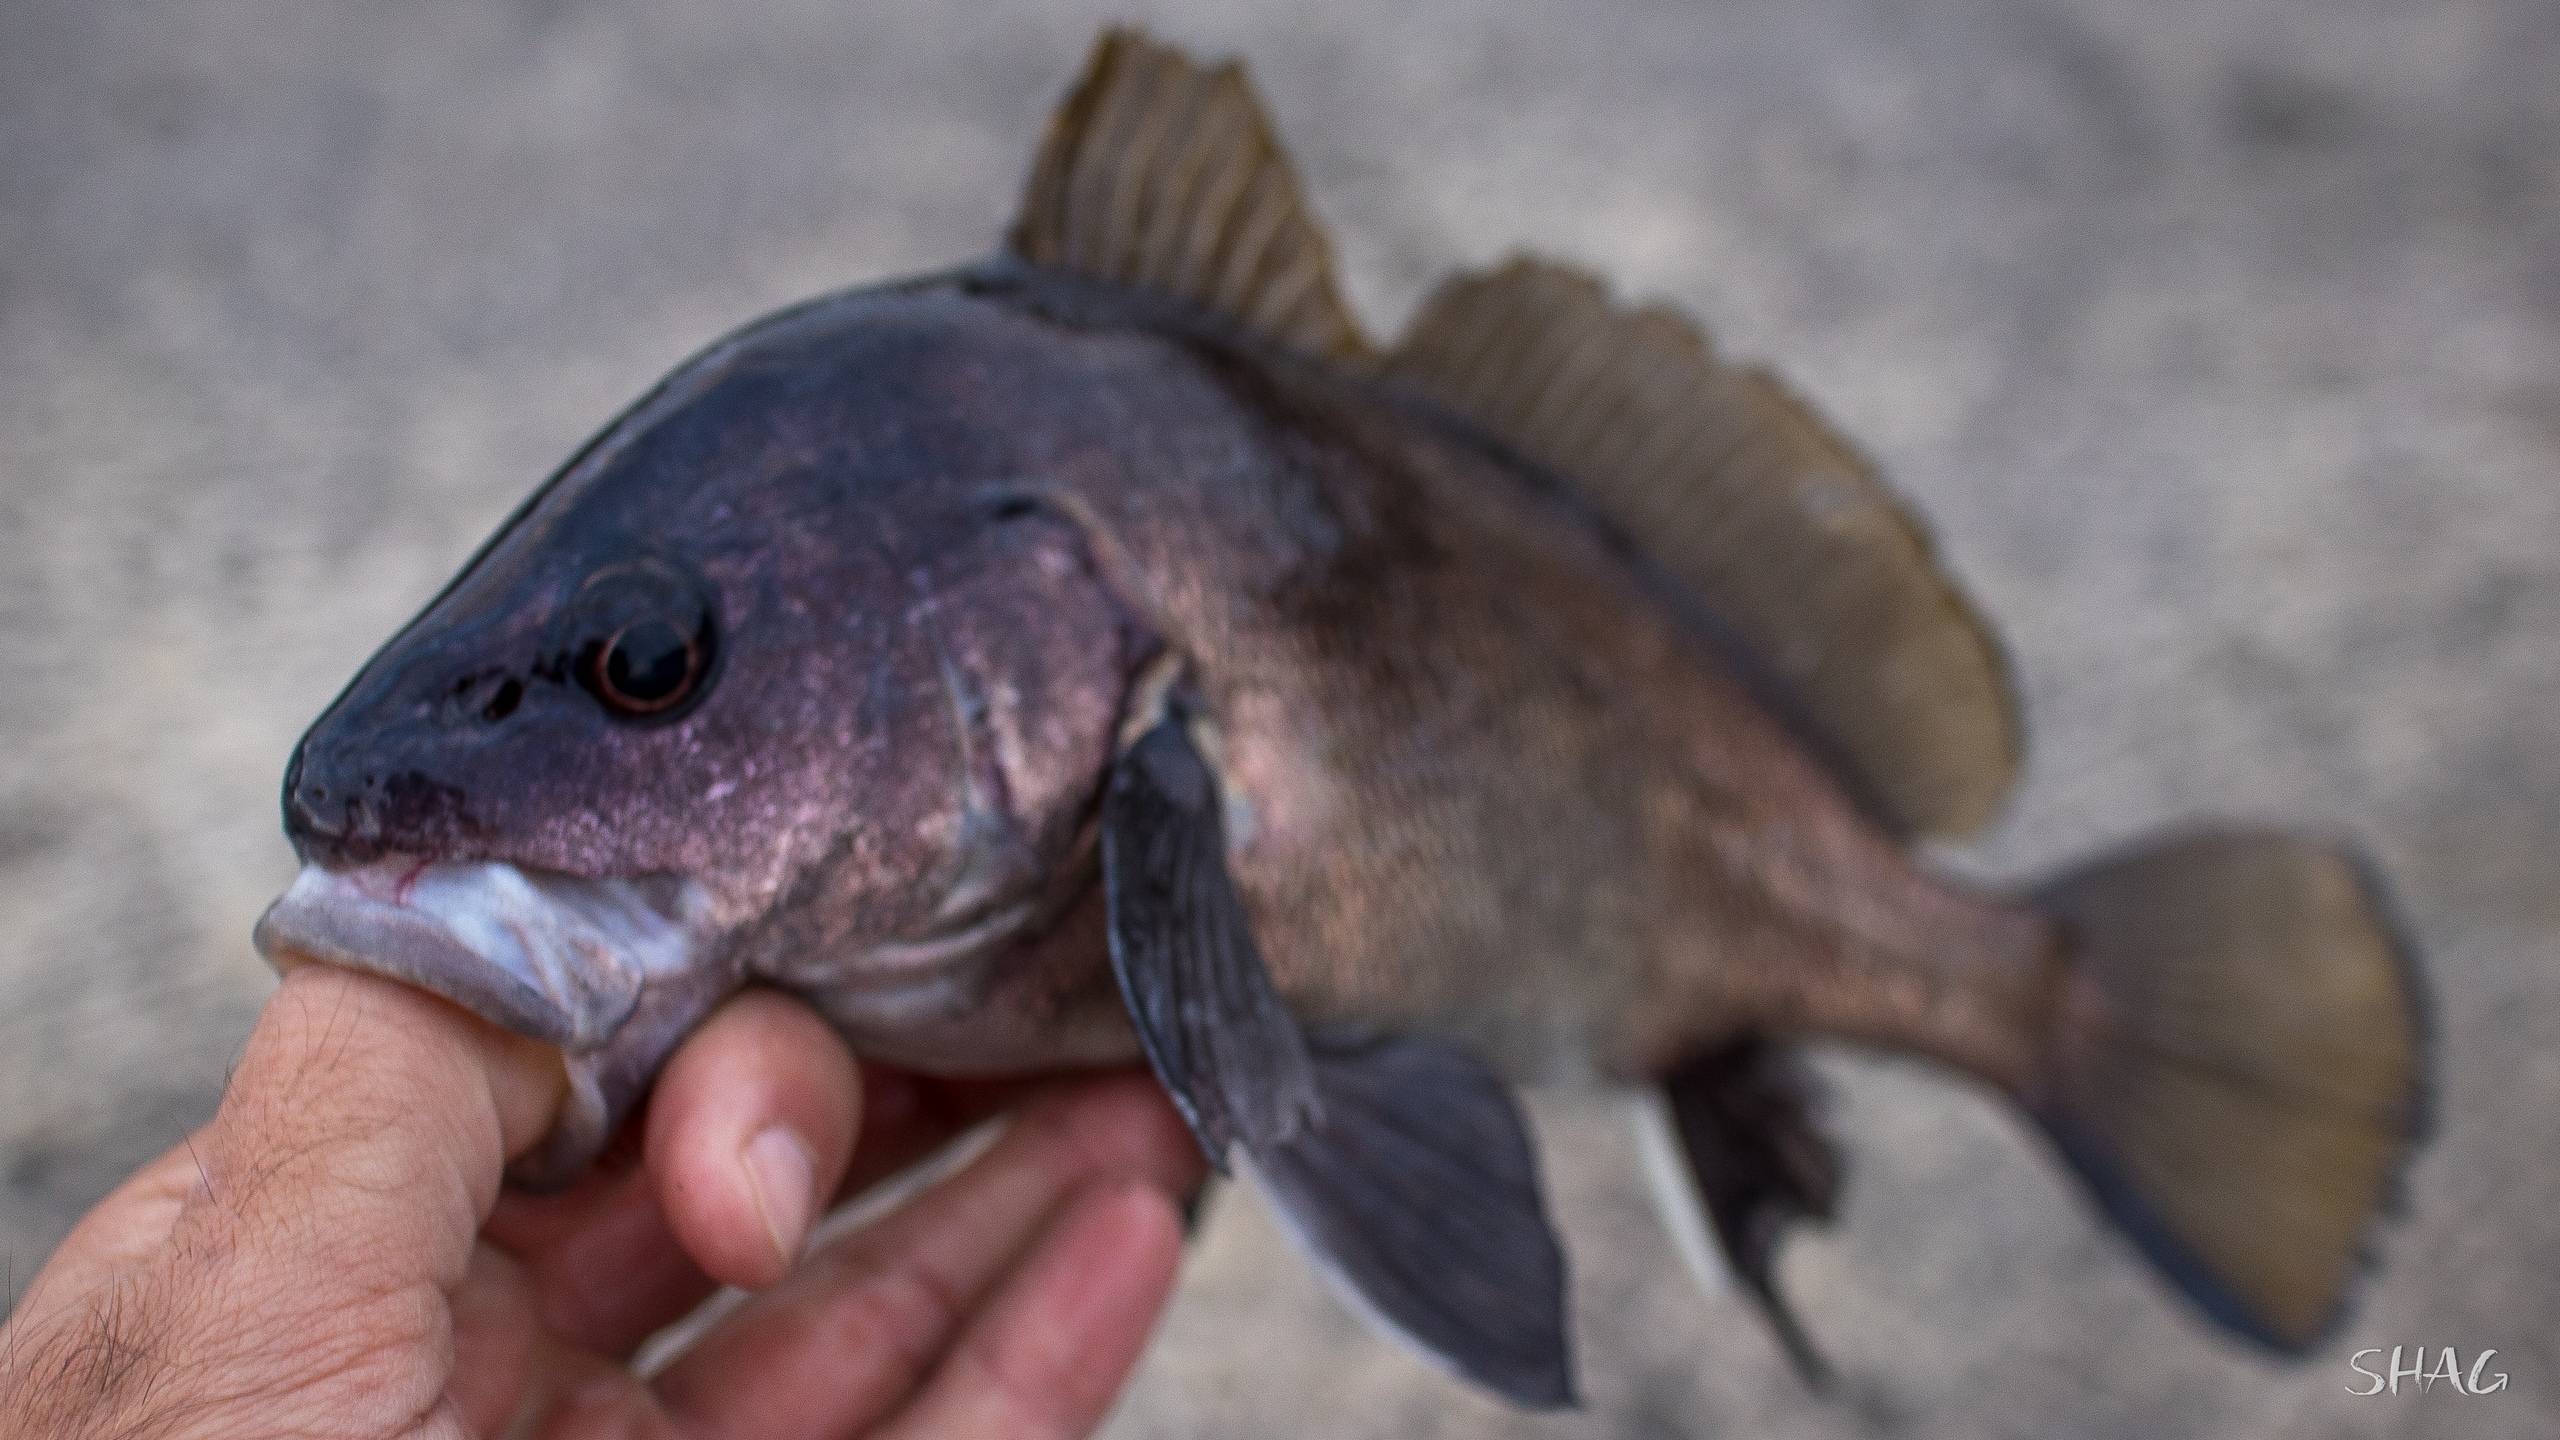 Белуга фото и описание – каталог рыб, смотреть онлайн